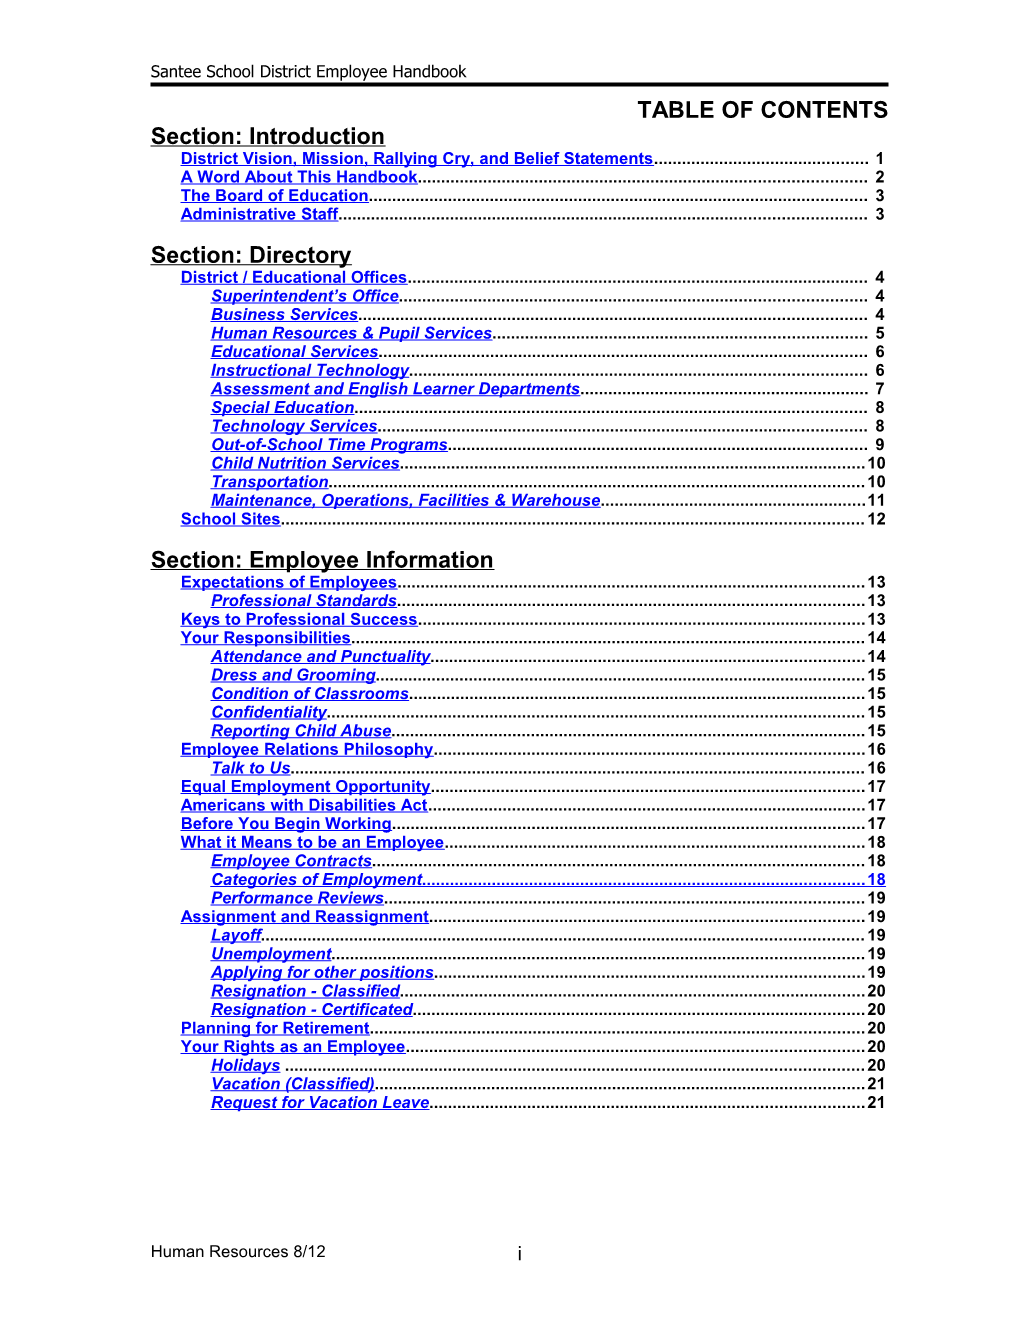 Employee Handbook Table of Contents